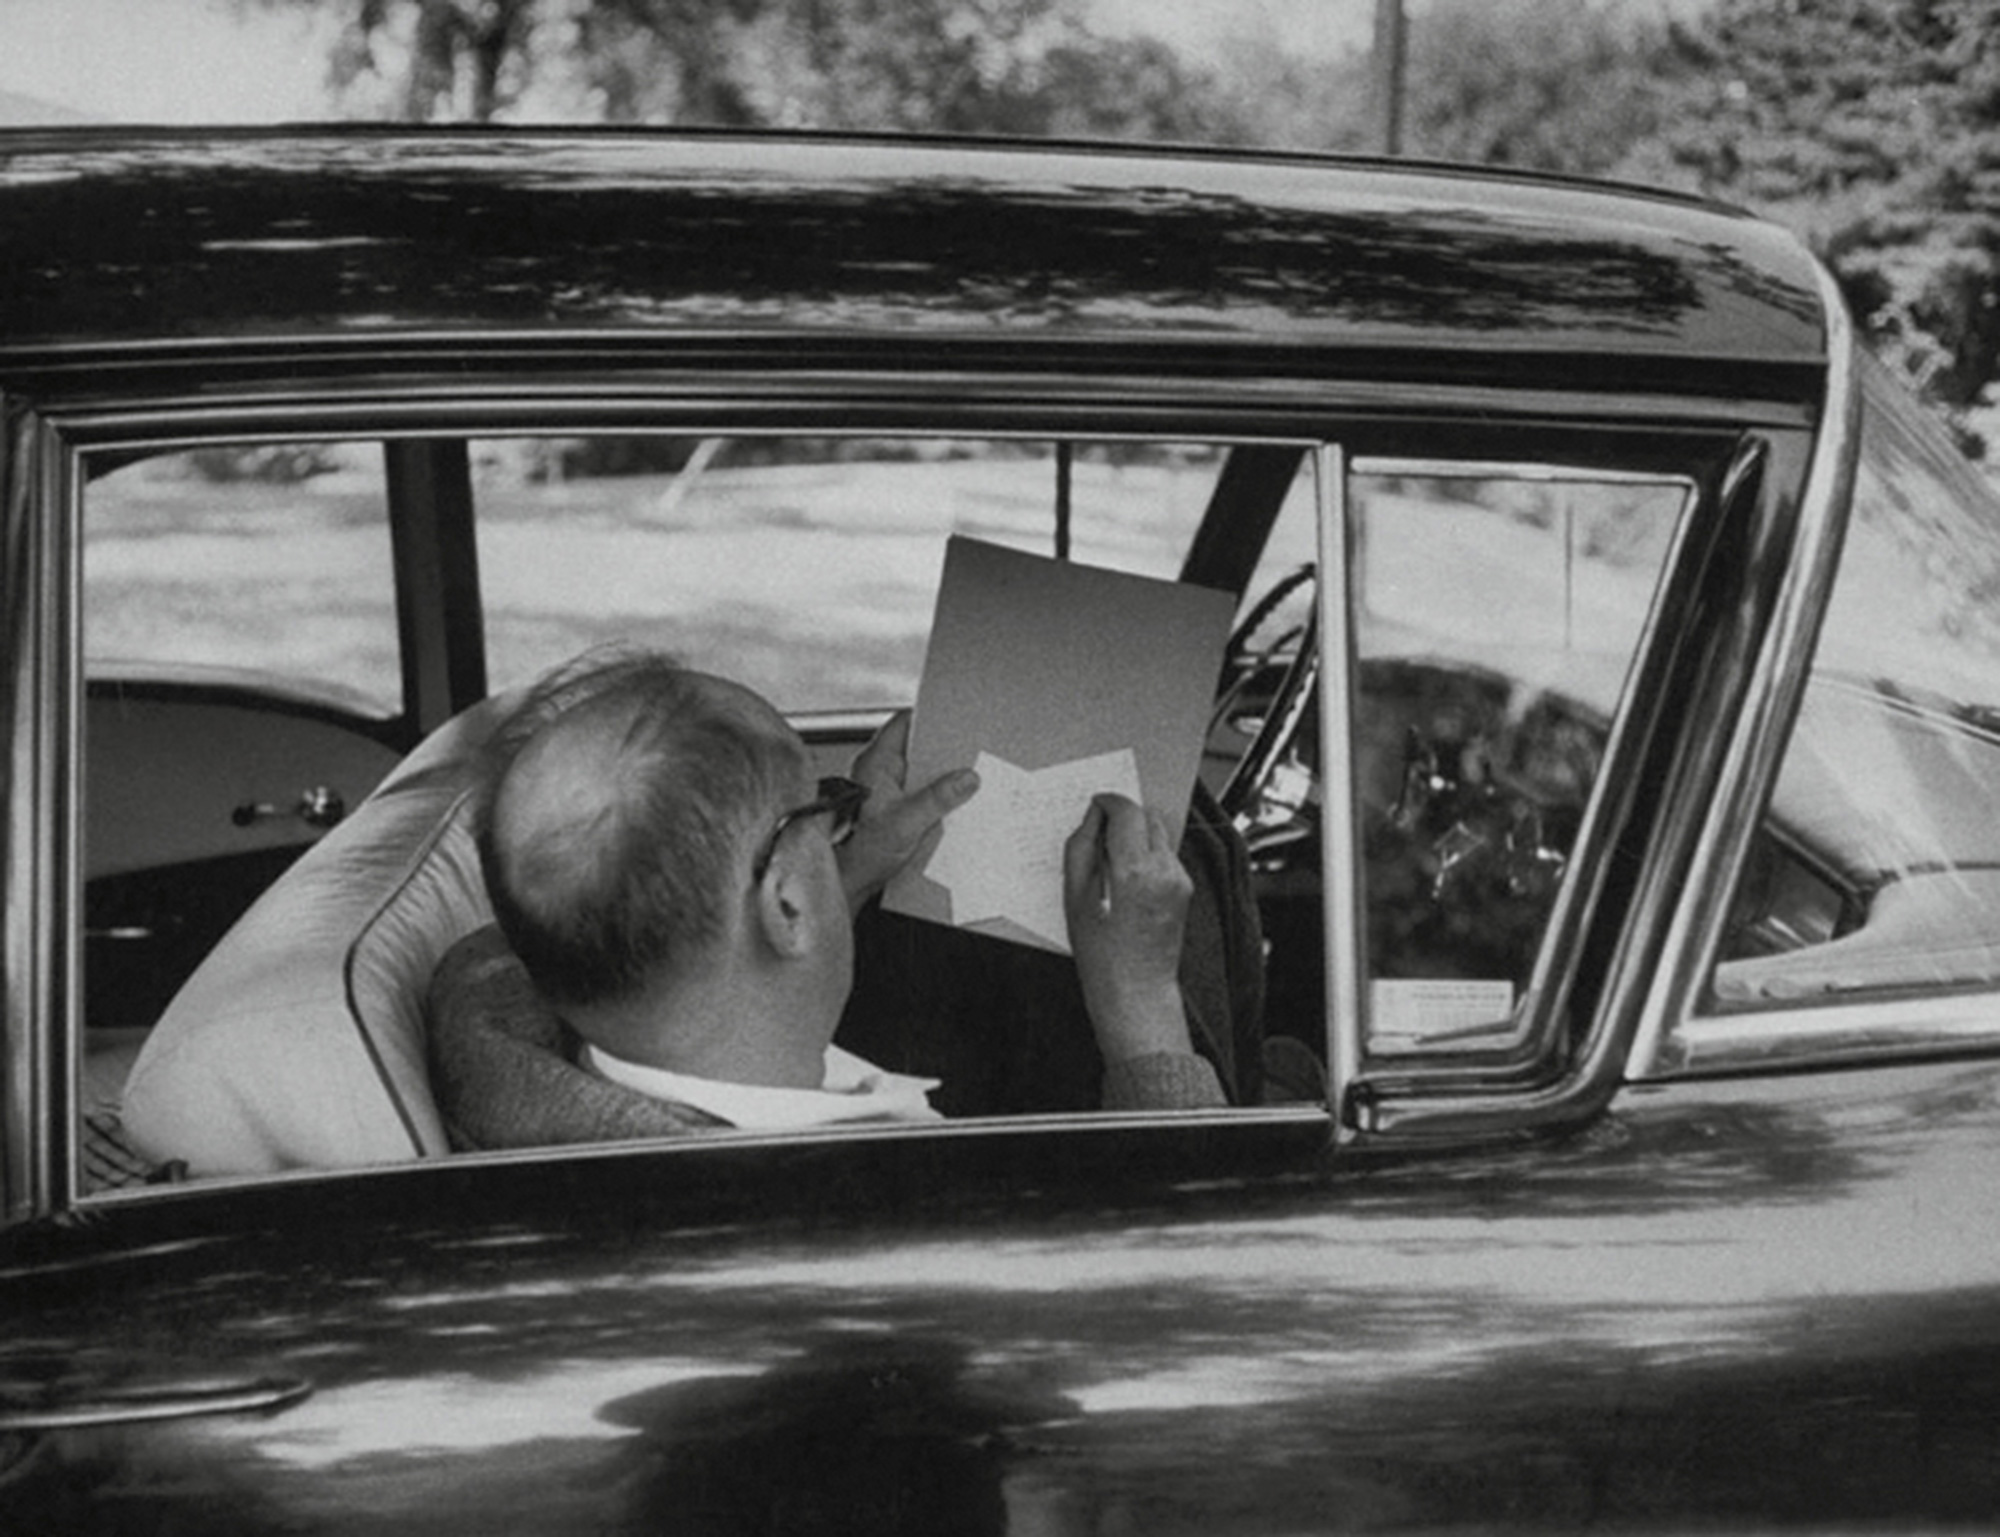 Vladimir Nabokov scribbling on note cards.